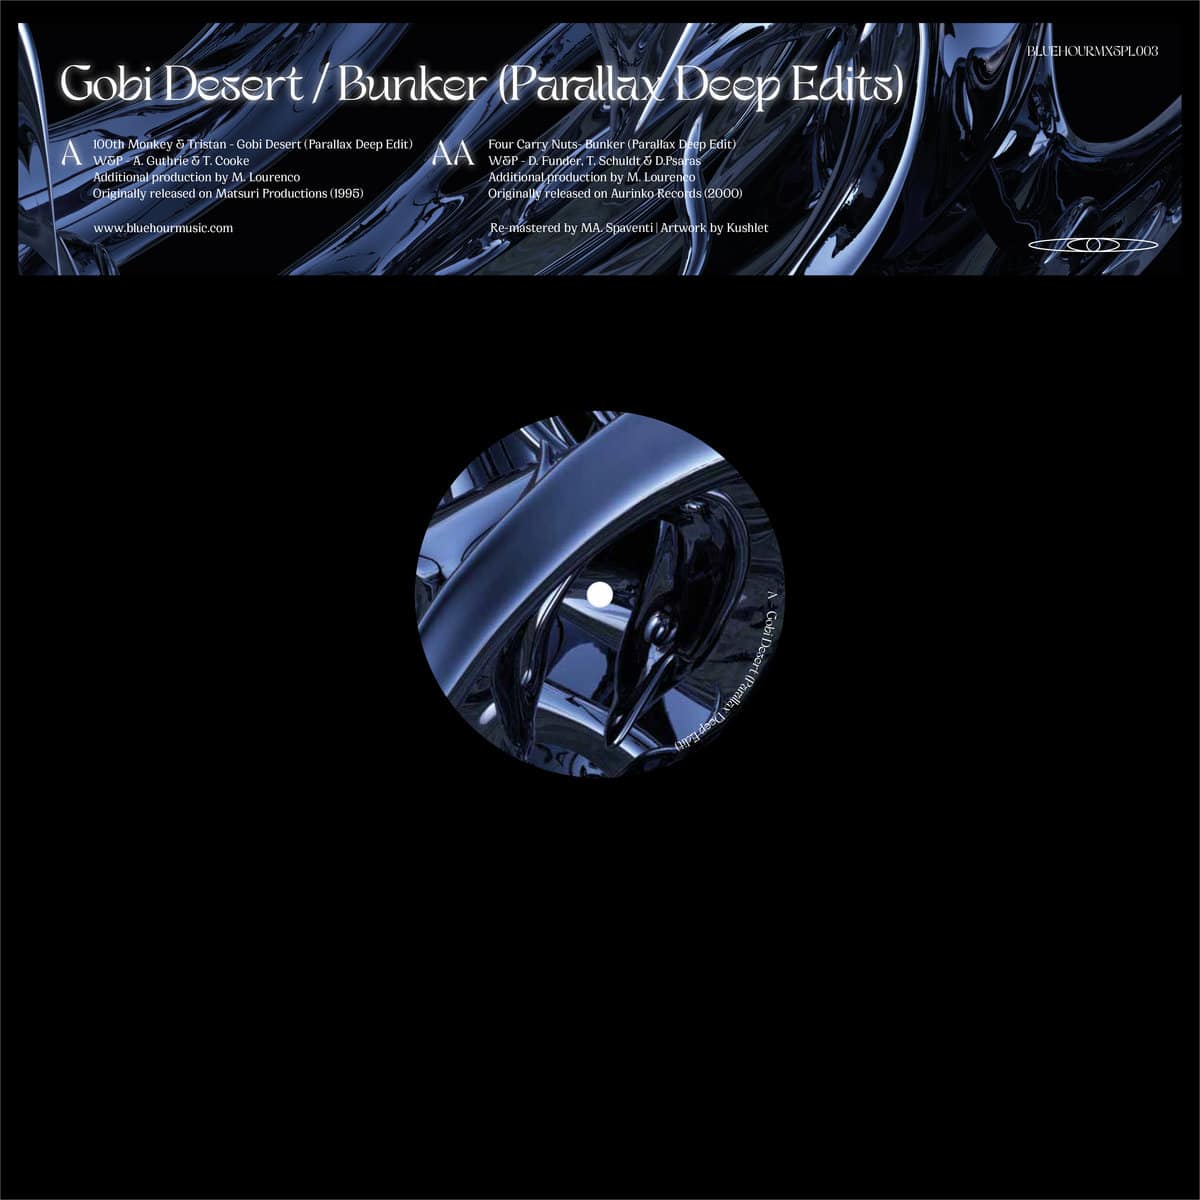 Release Cover: Various Artists - Gobi Desert/Bunker(Parallax Deep Edits) on Electrobuzz